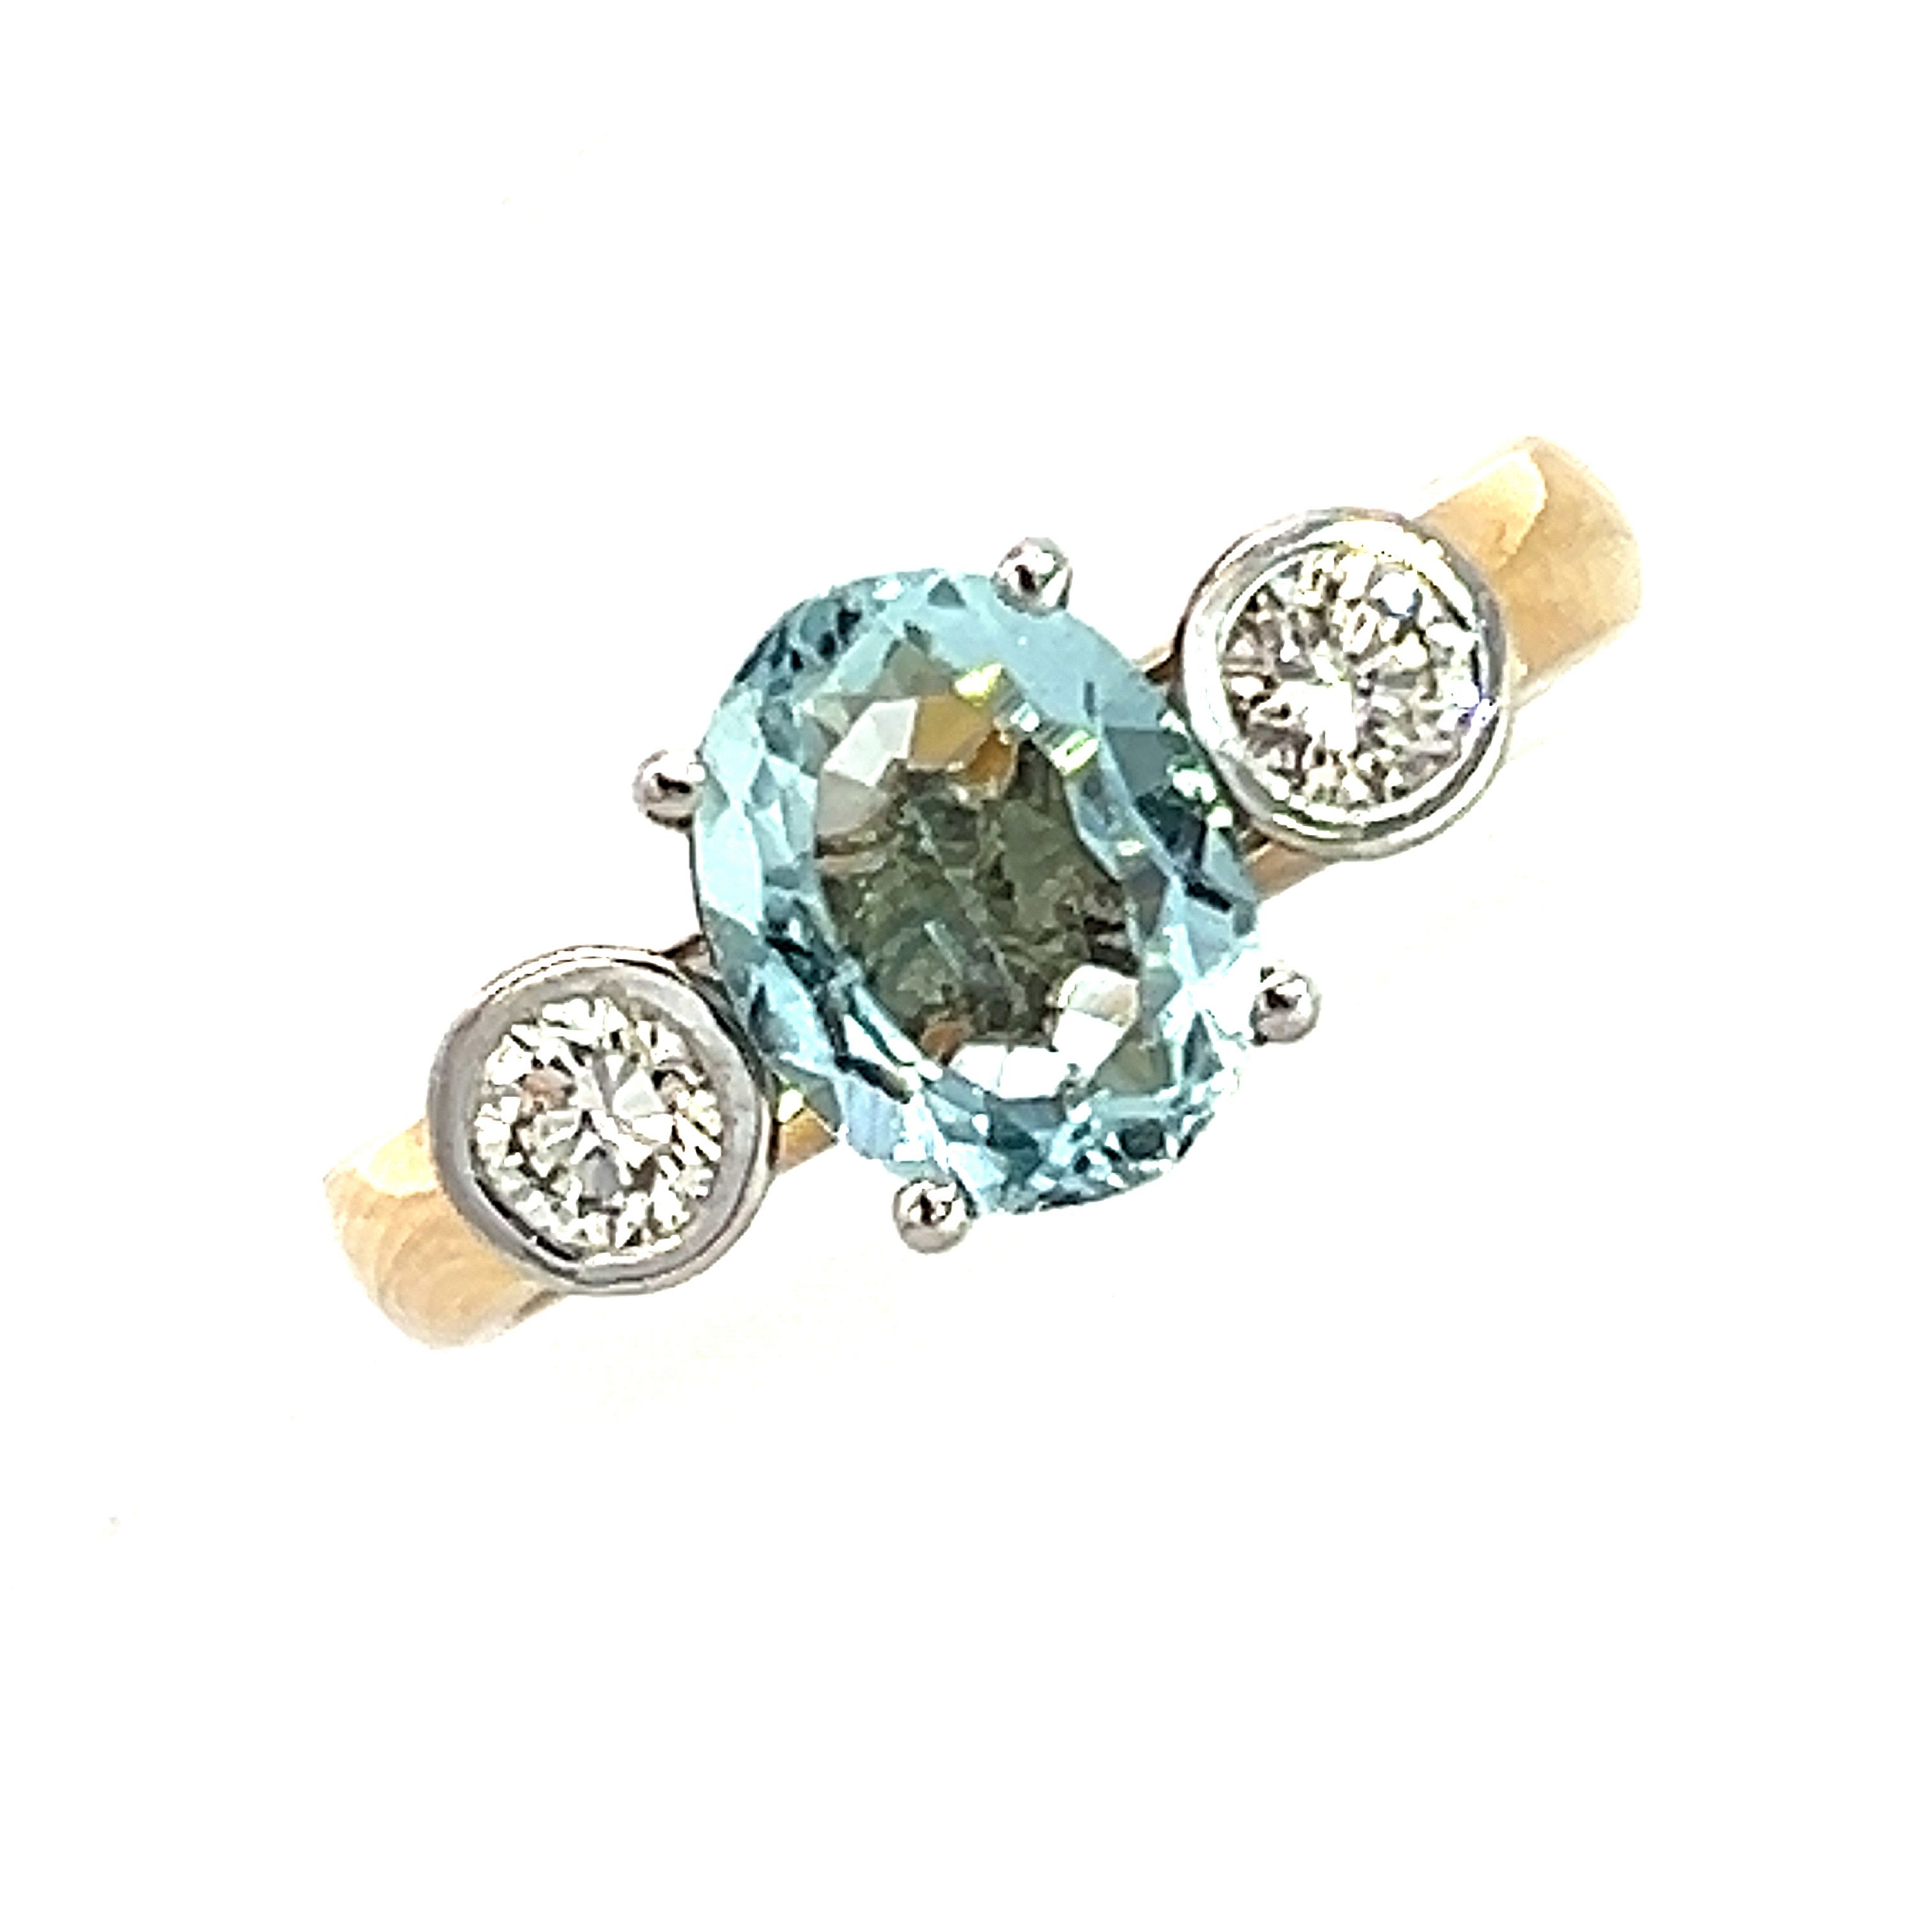 A Modern Aquamarine and Diamond Ring